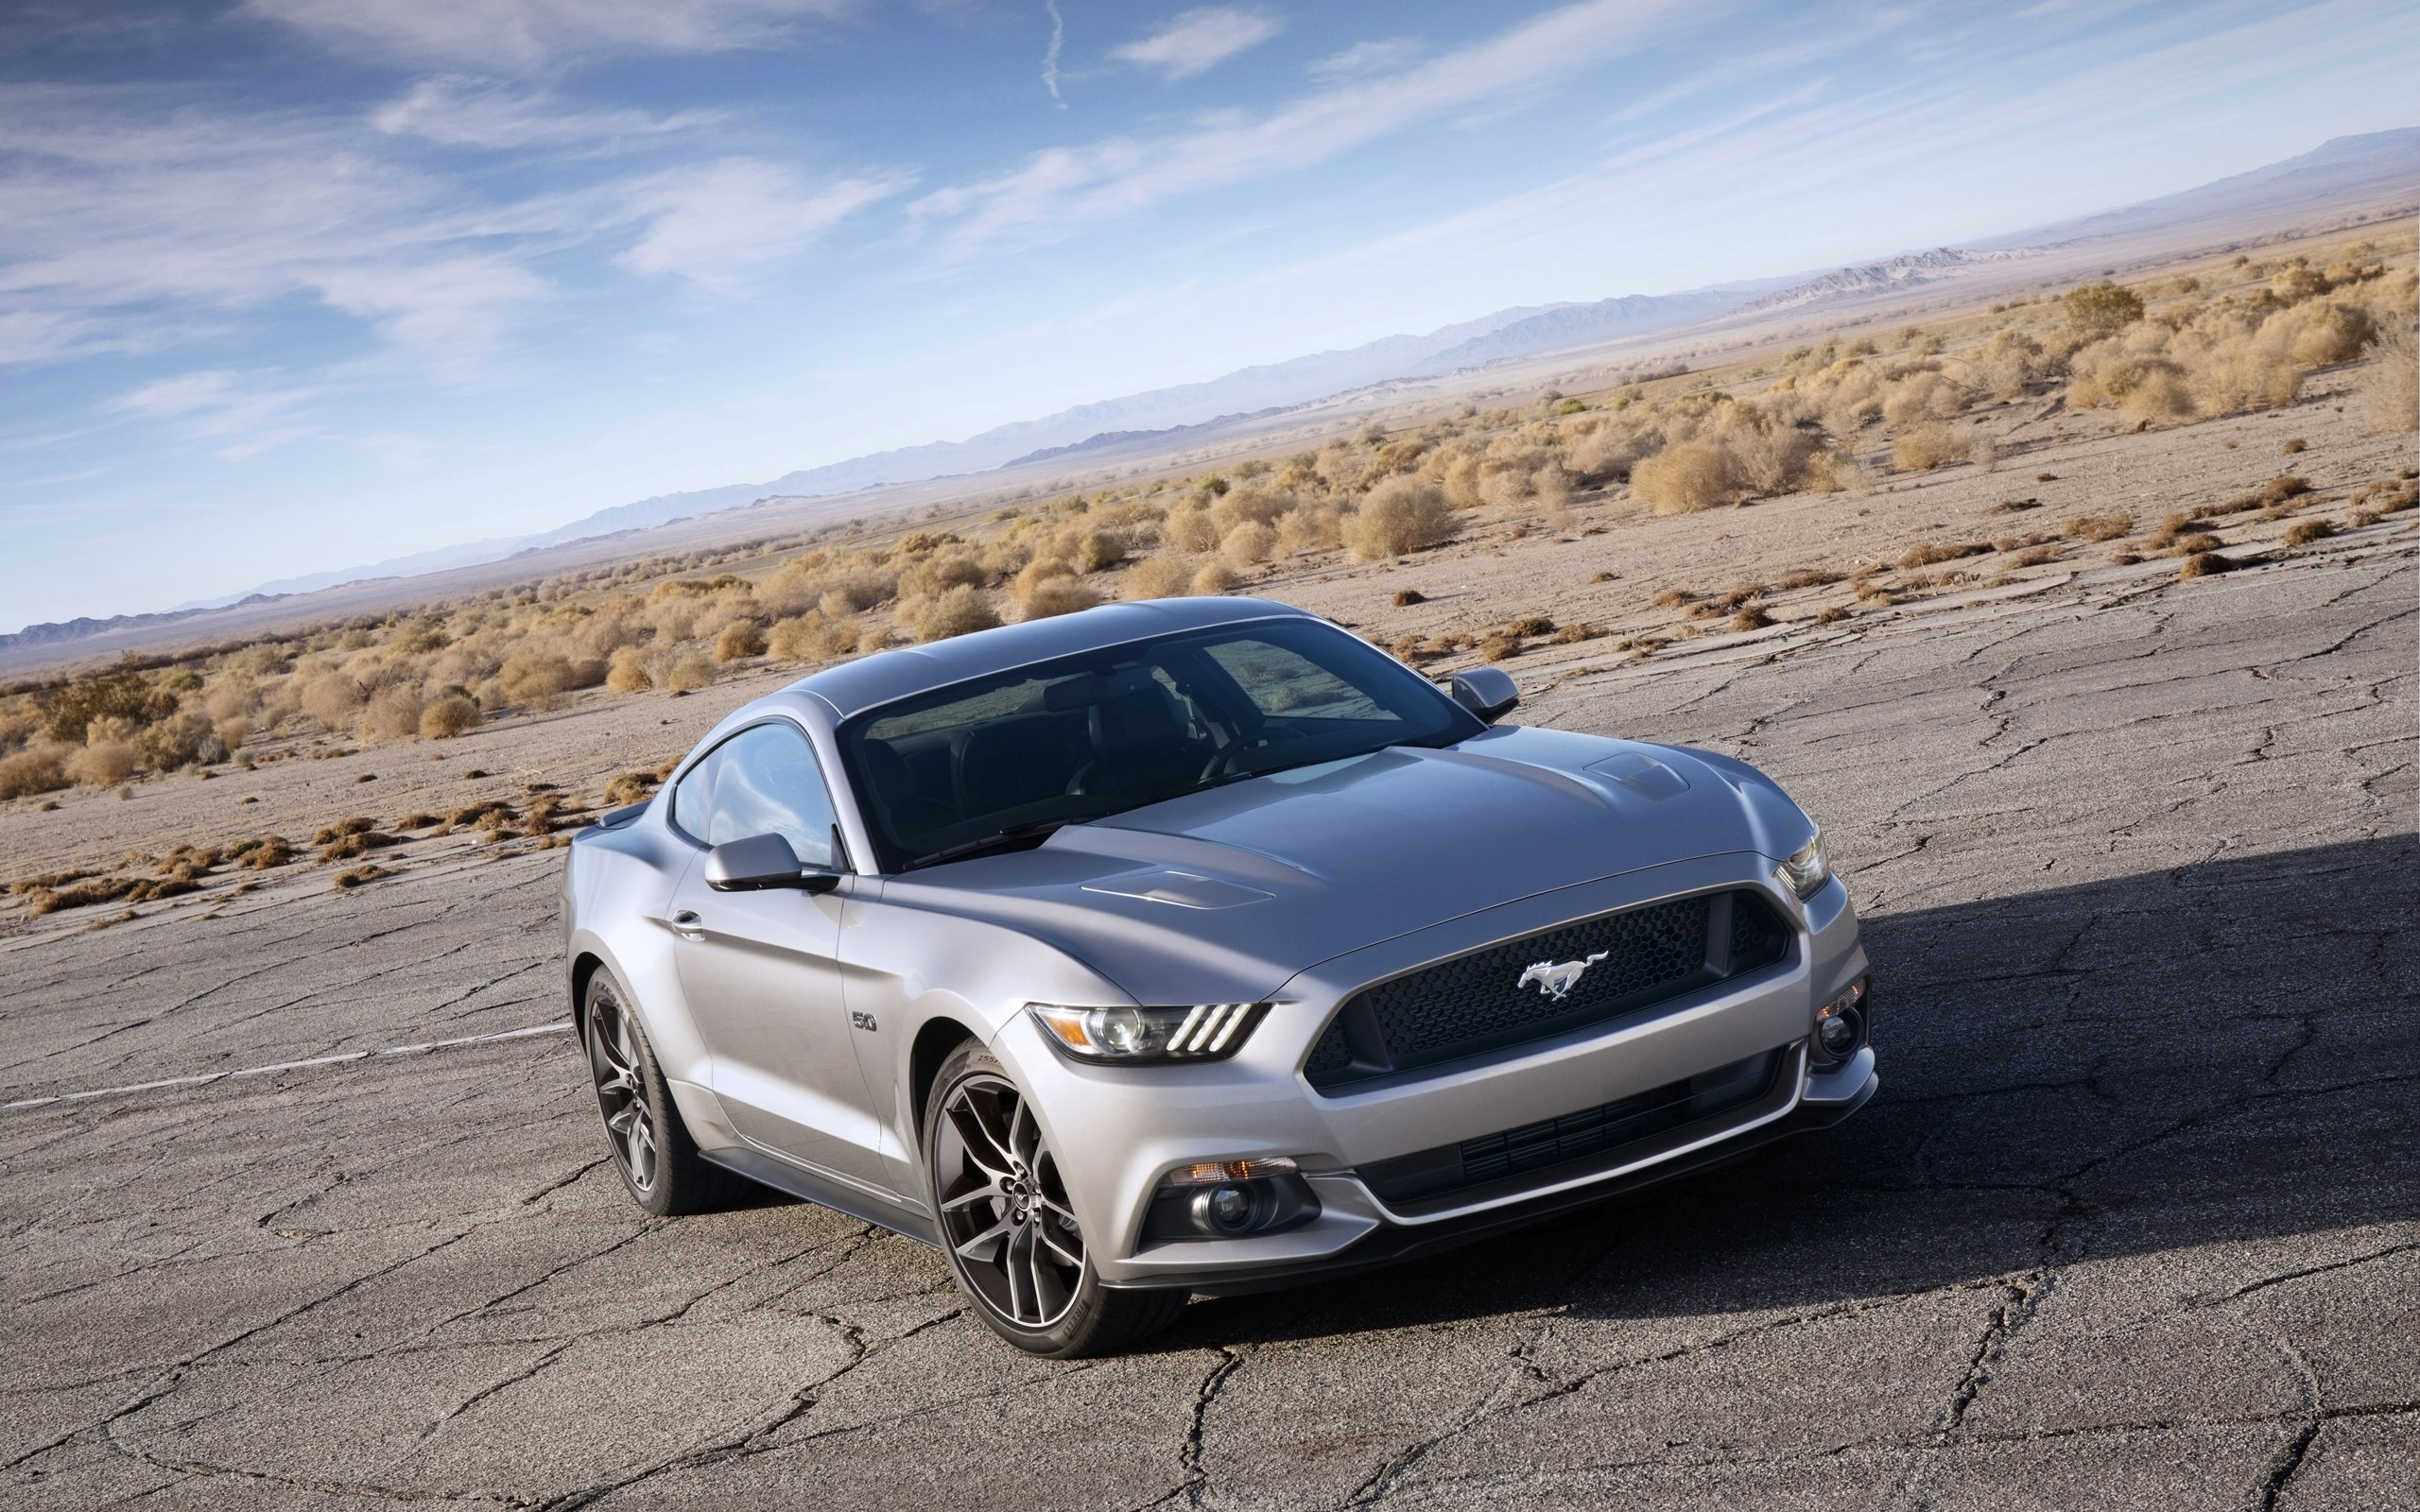 2015 Ford Mustang 4 Wallpaper | HD Car Wallpapers | ID #3973
 2015 Ford Mustang Wallpaper Hd